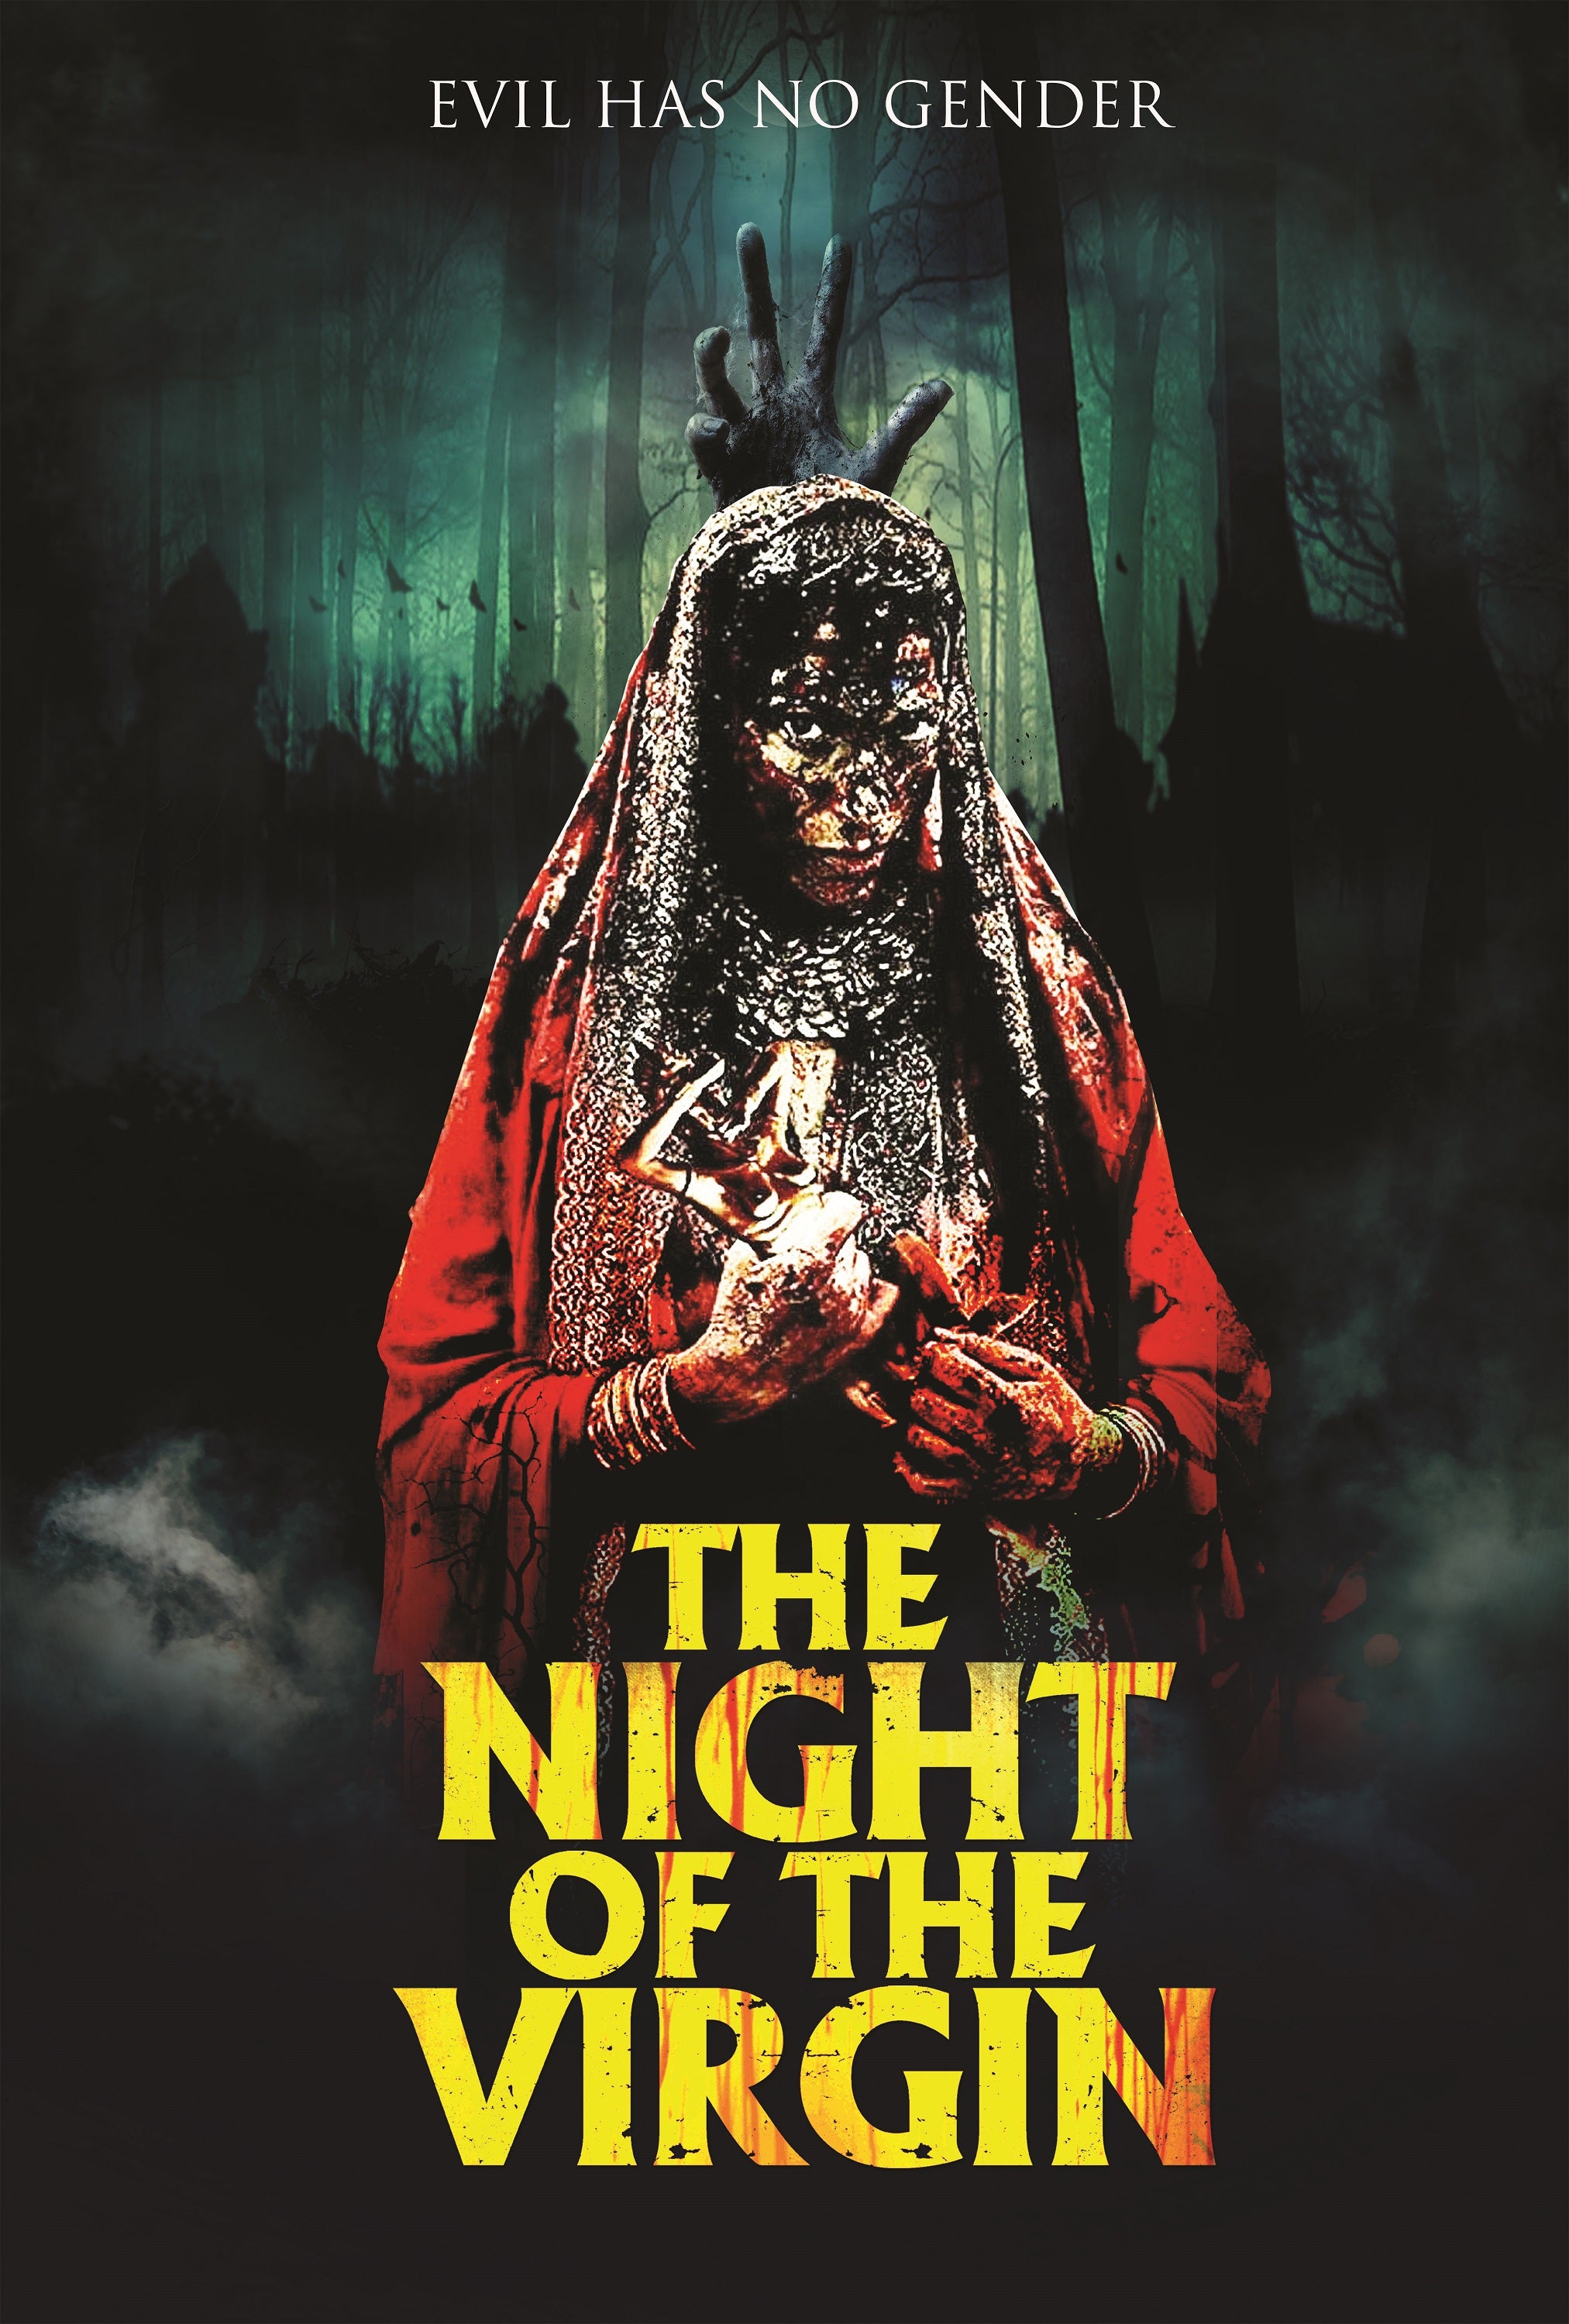 THE NIGHT OF THE VIRGIN DVD